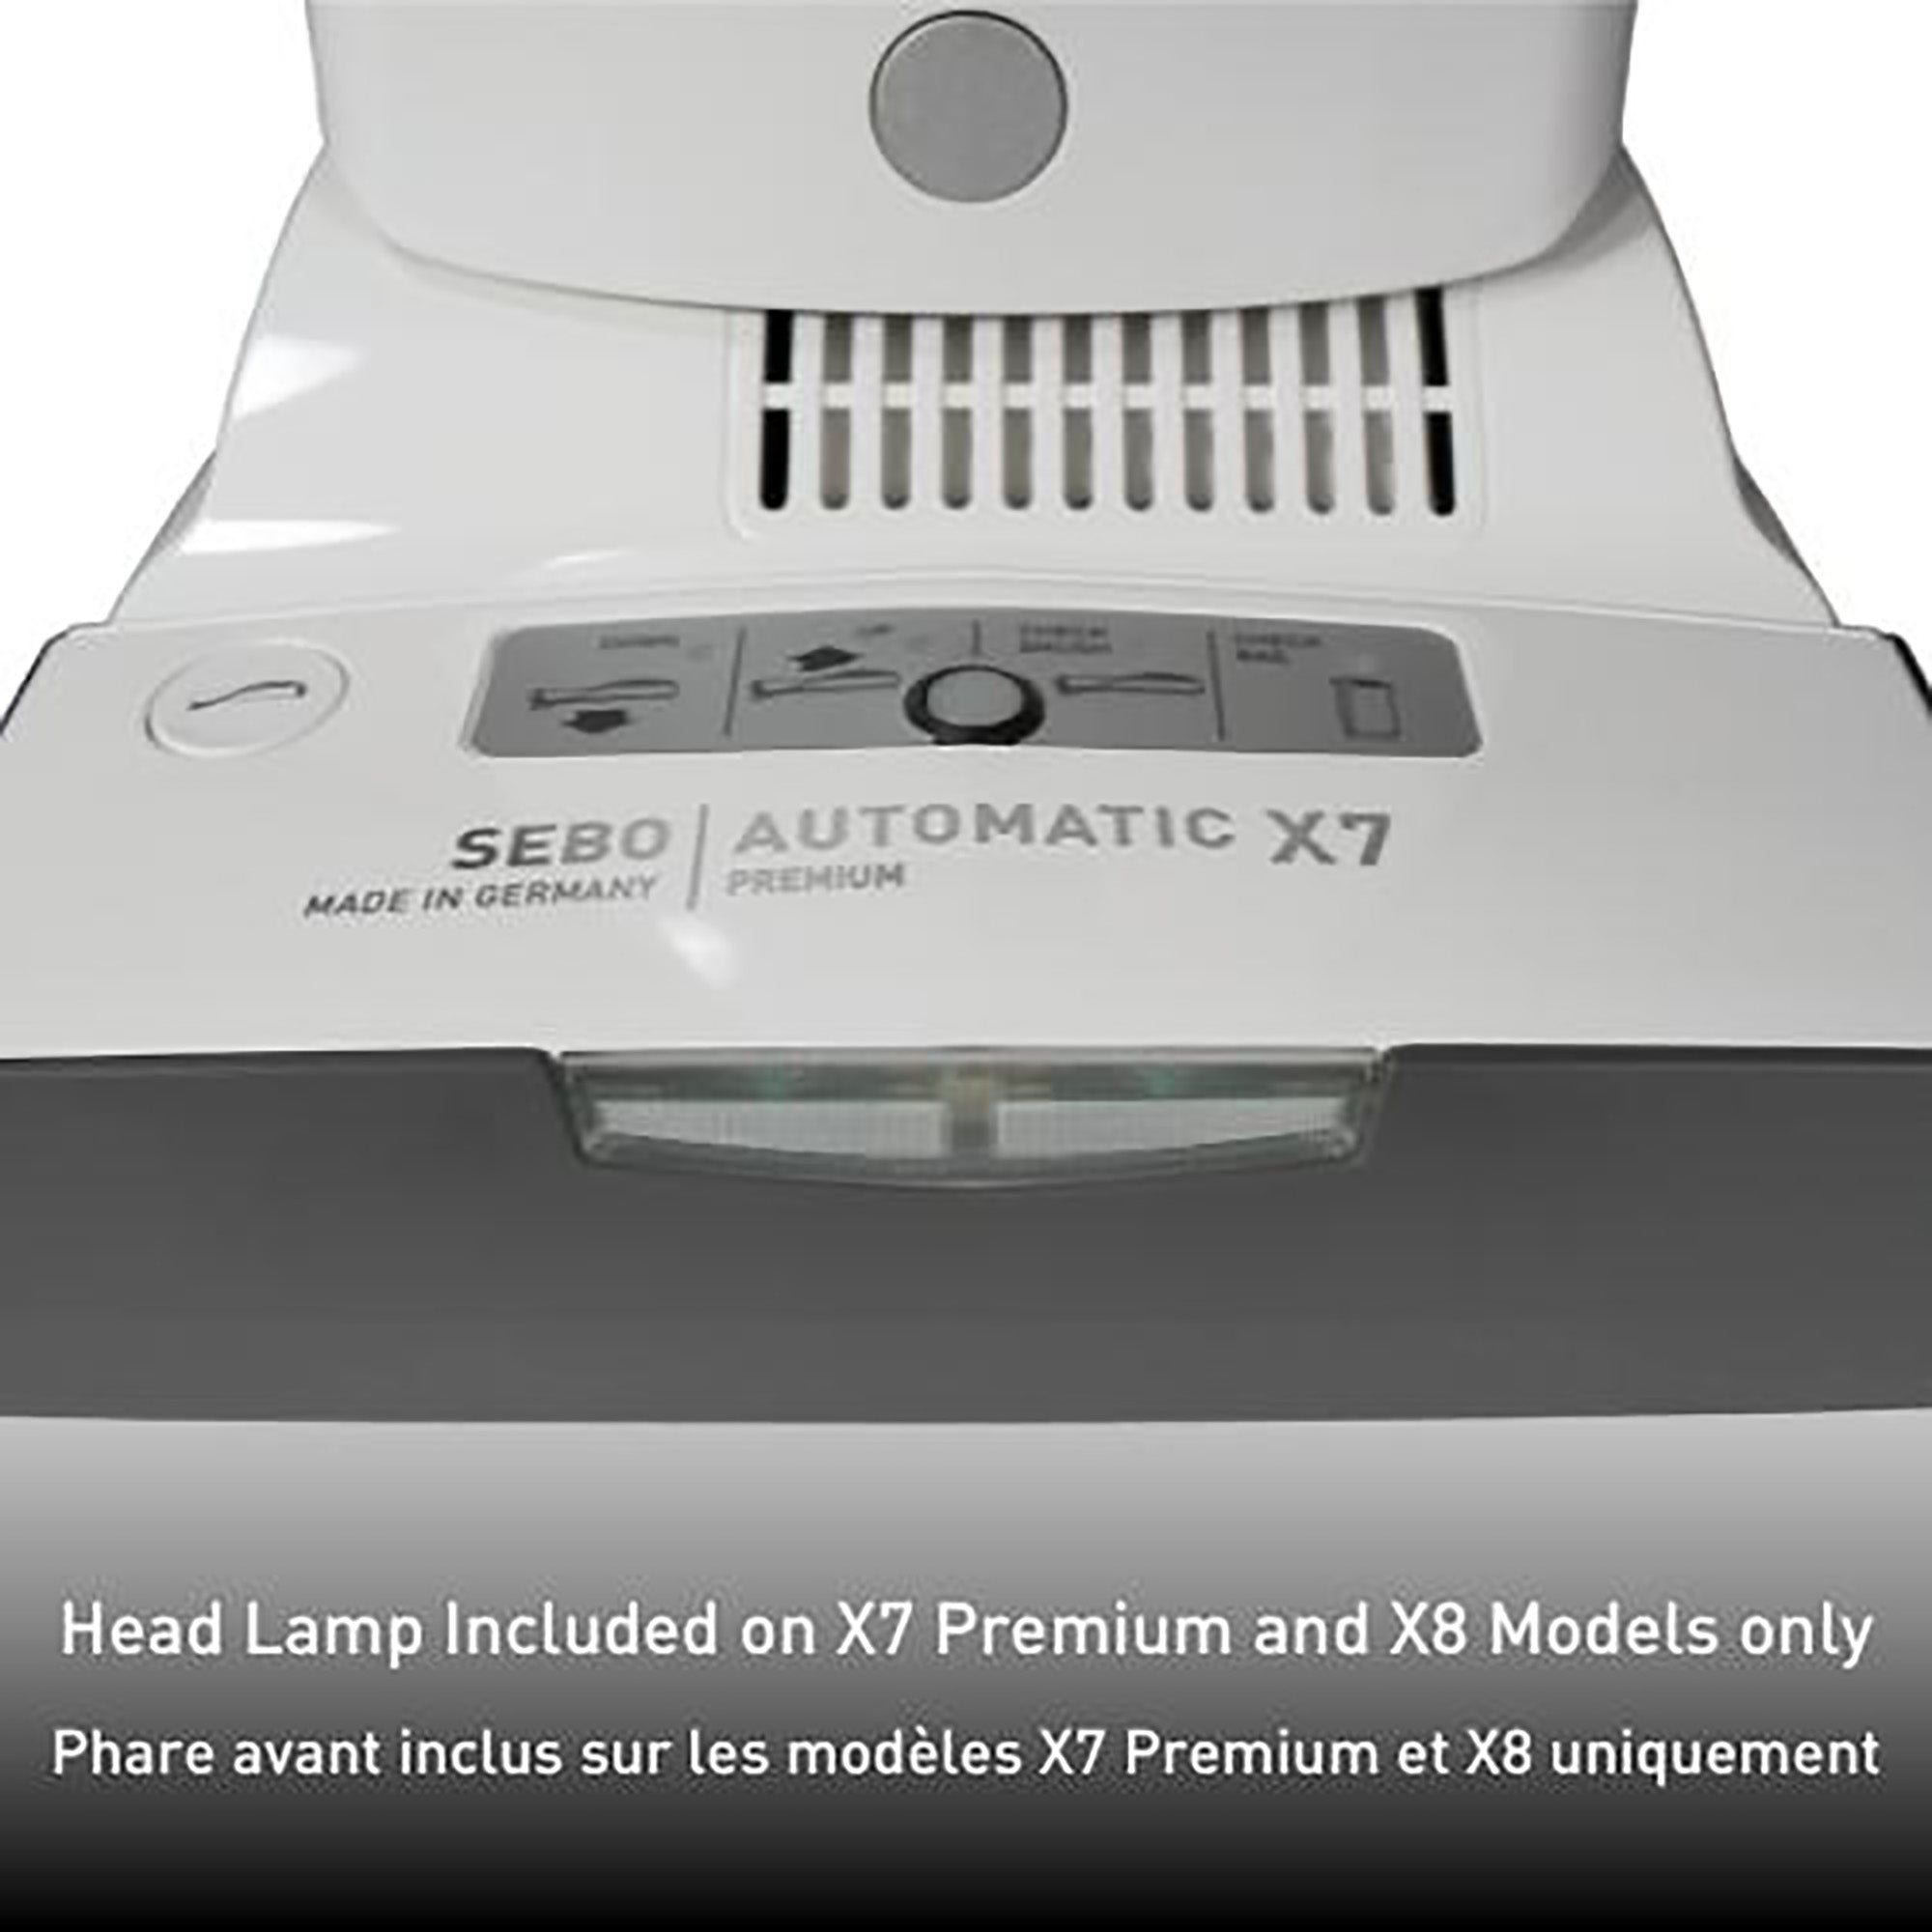 SEBO Automatic X7 Premium Upright Vacuum